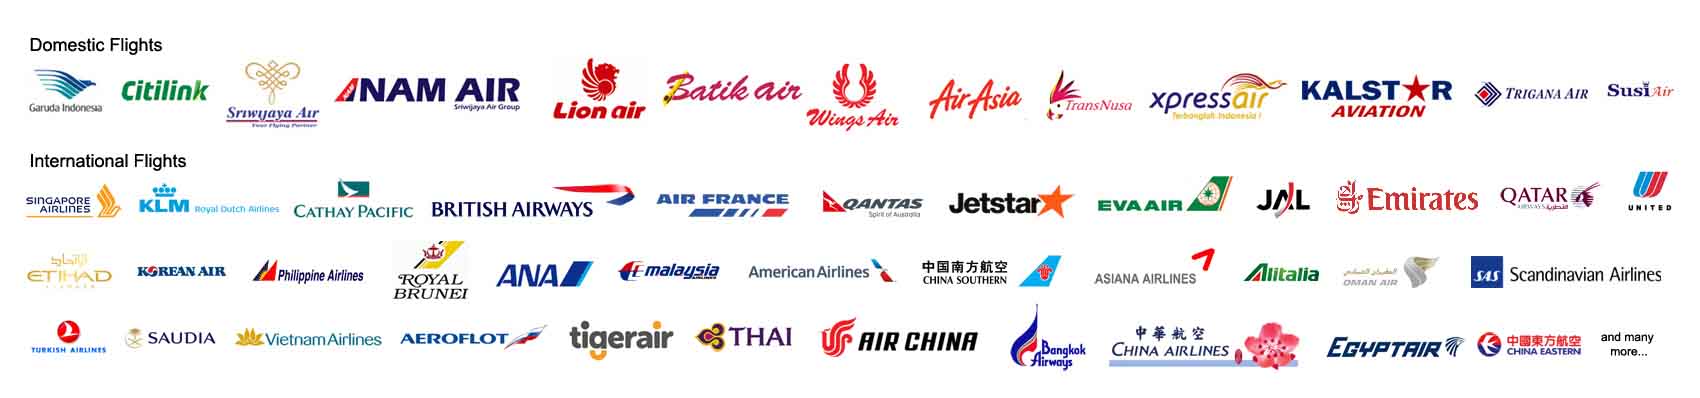 jual tiket pesawat murah semua maskapai indonesia dan maskapai asing